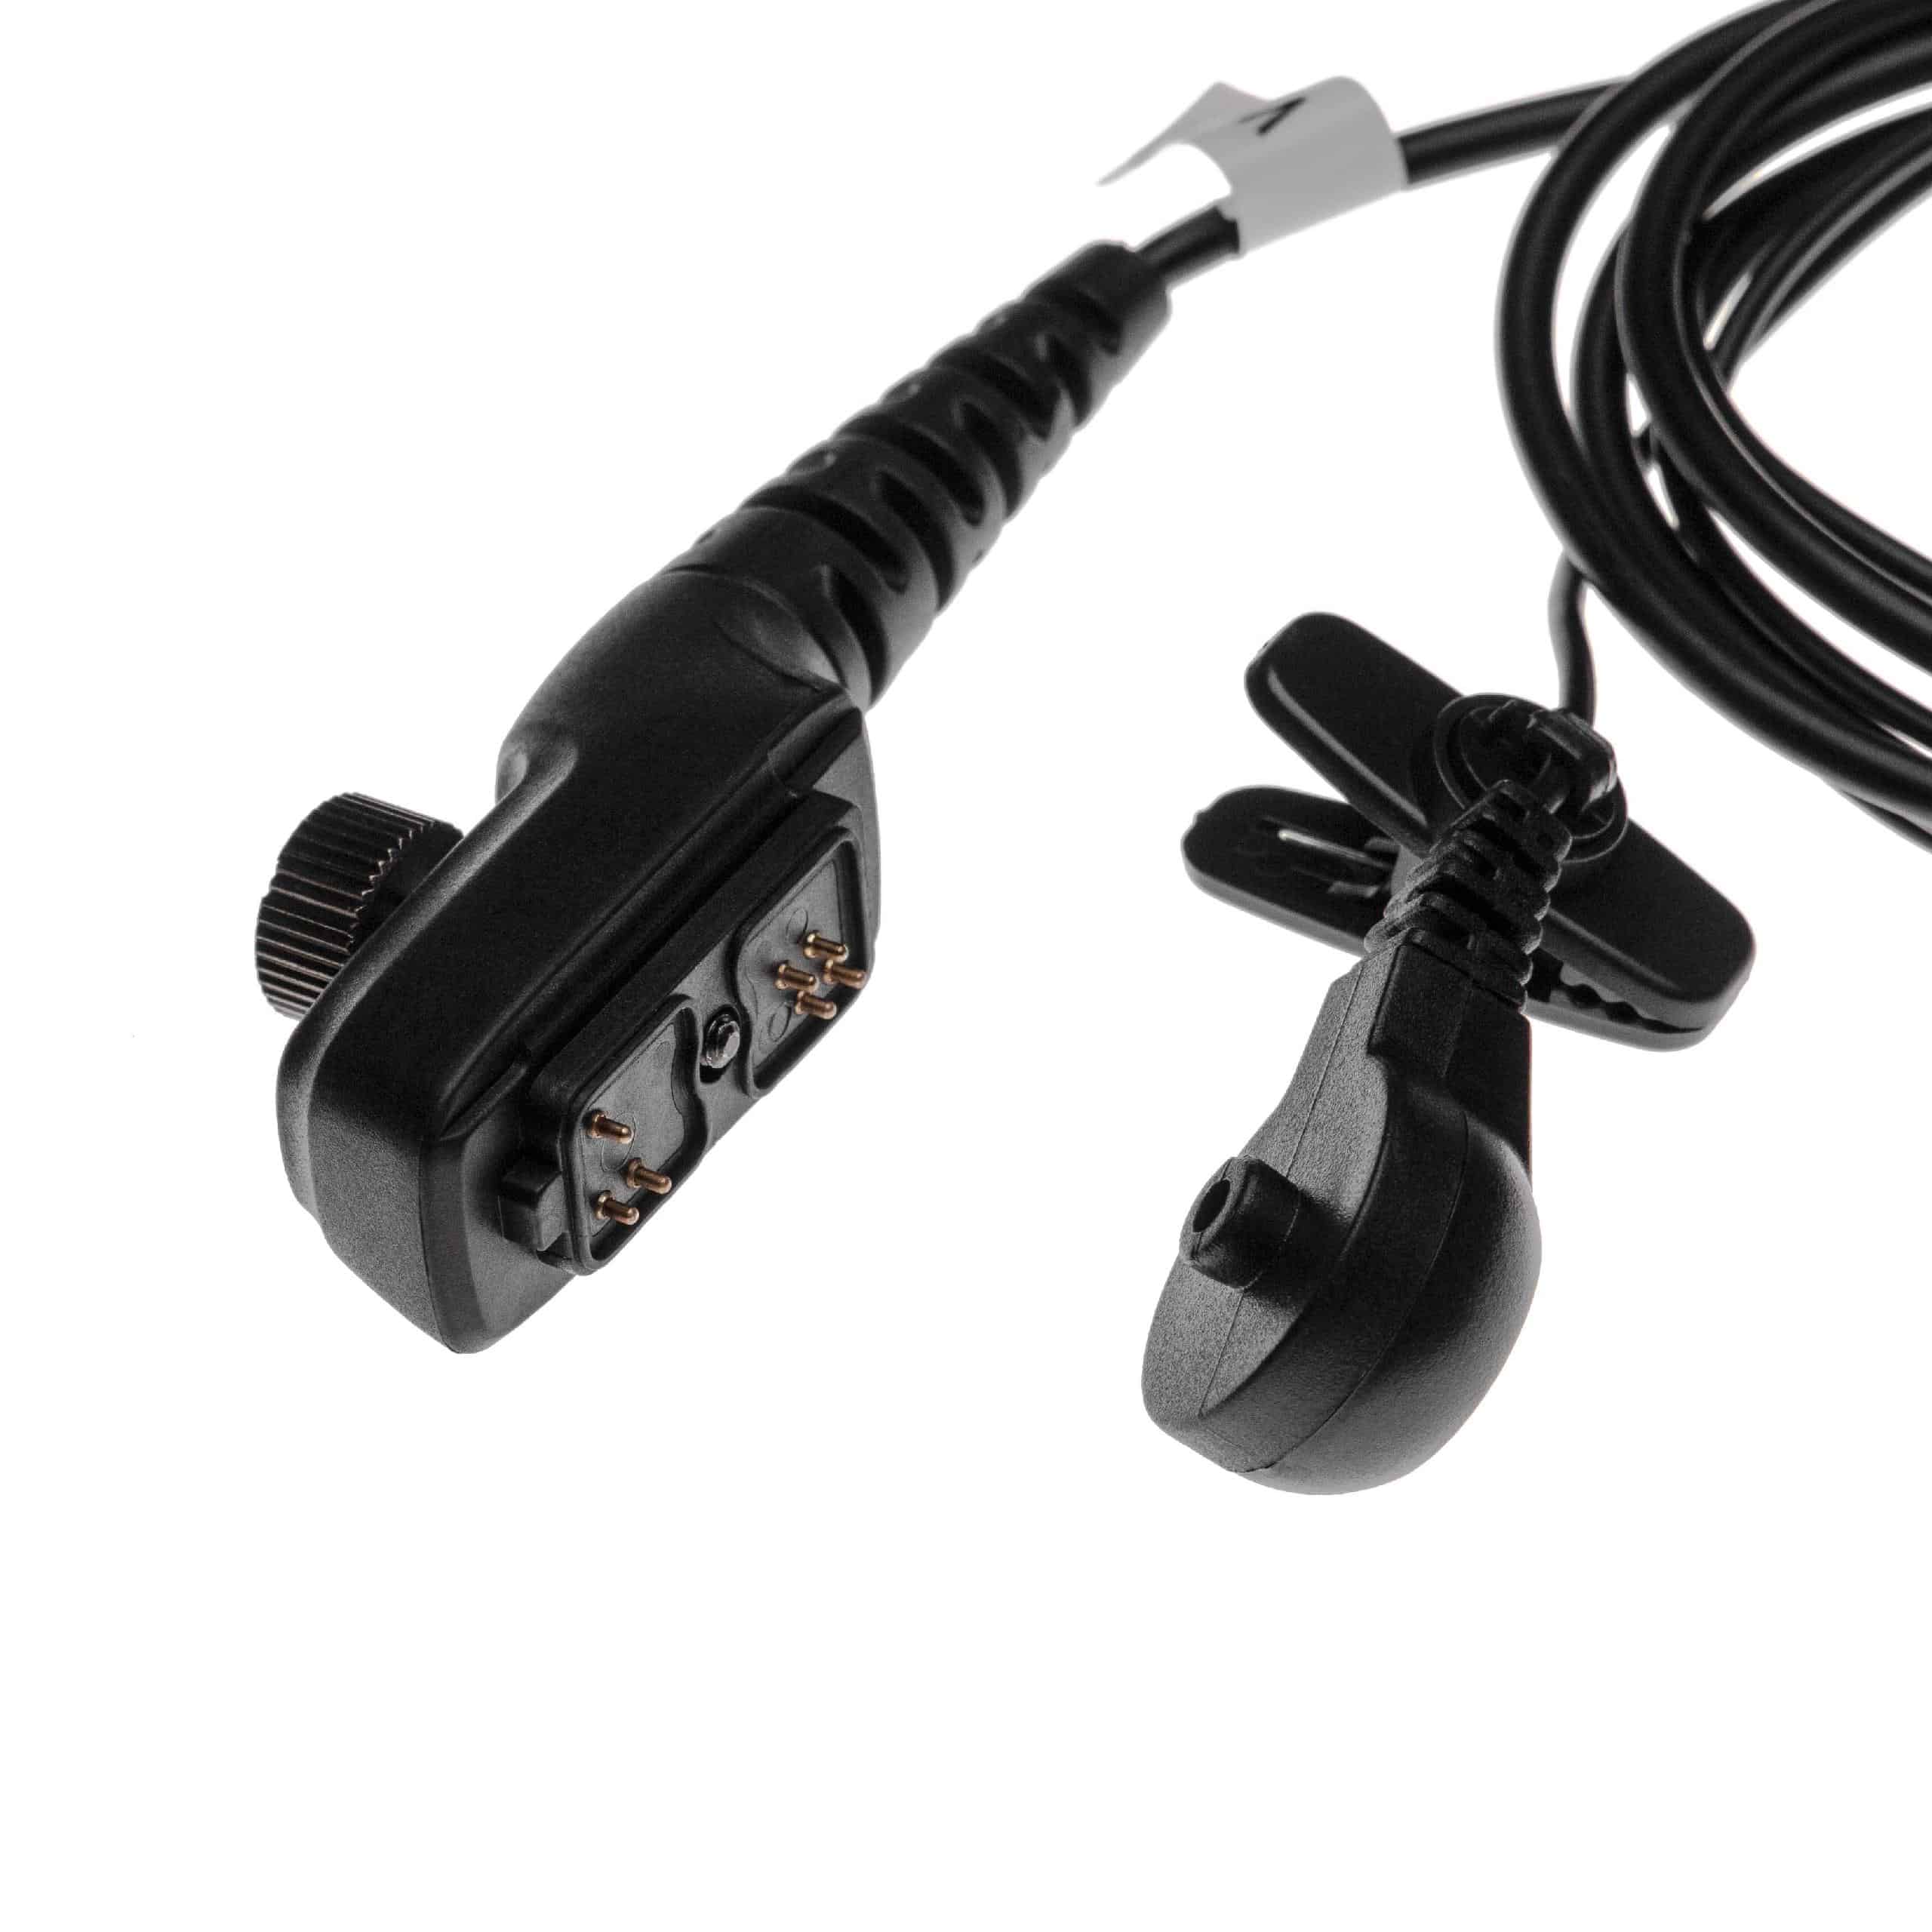 Security headset per ricetrasmittente HYT/Hytera PD700 - trasparente / nero + microfono push-to-talk + support